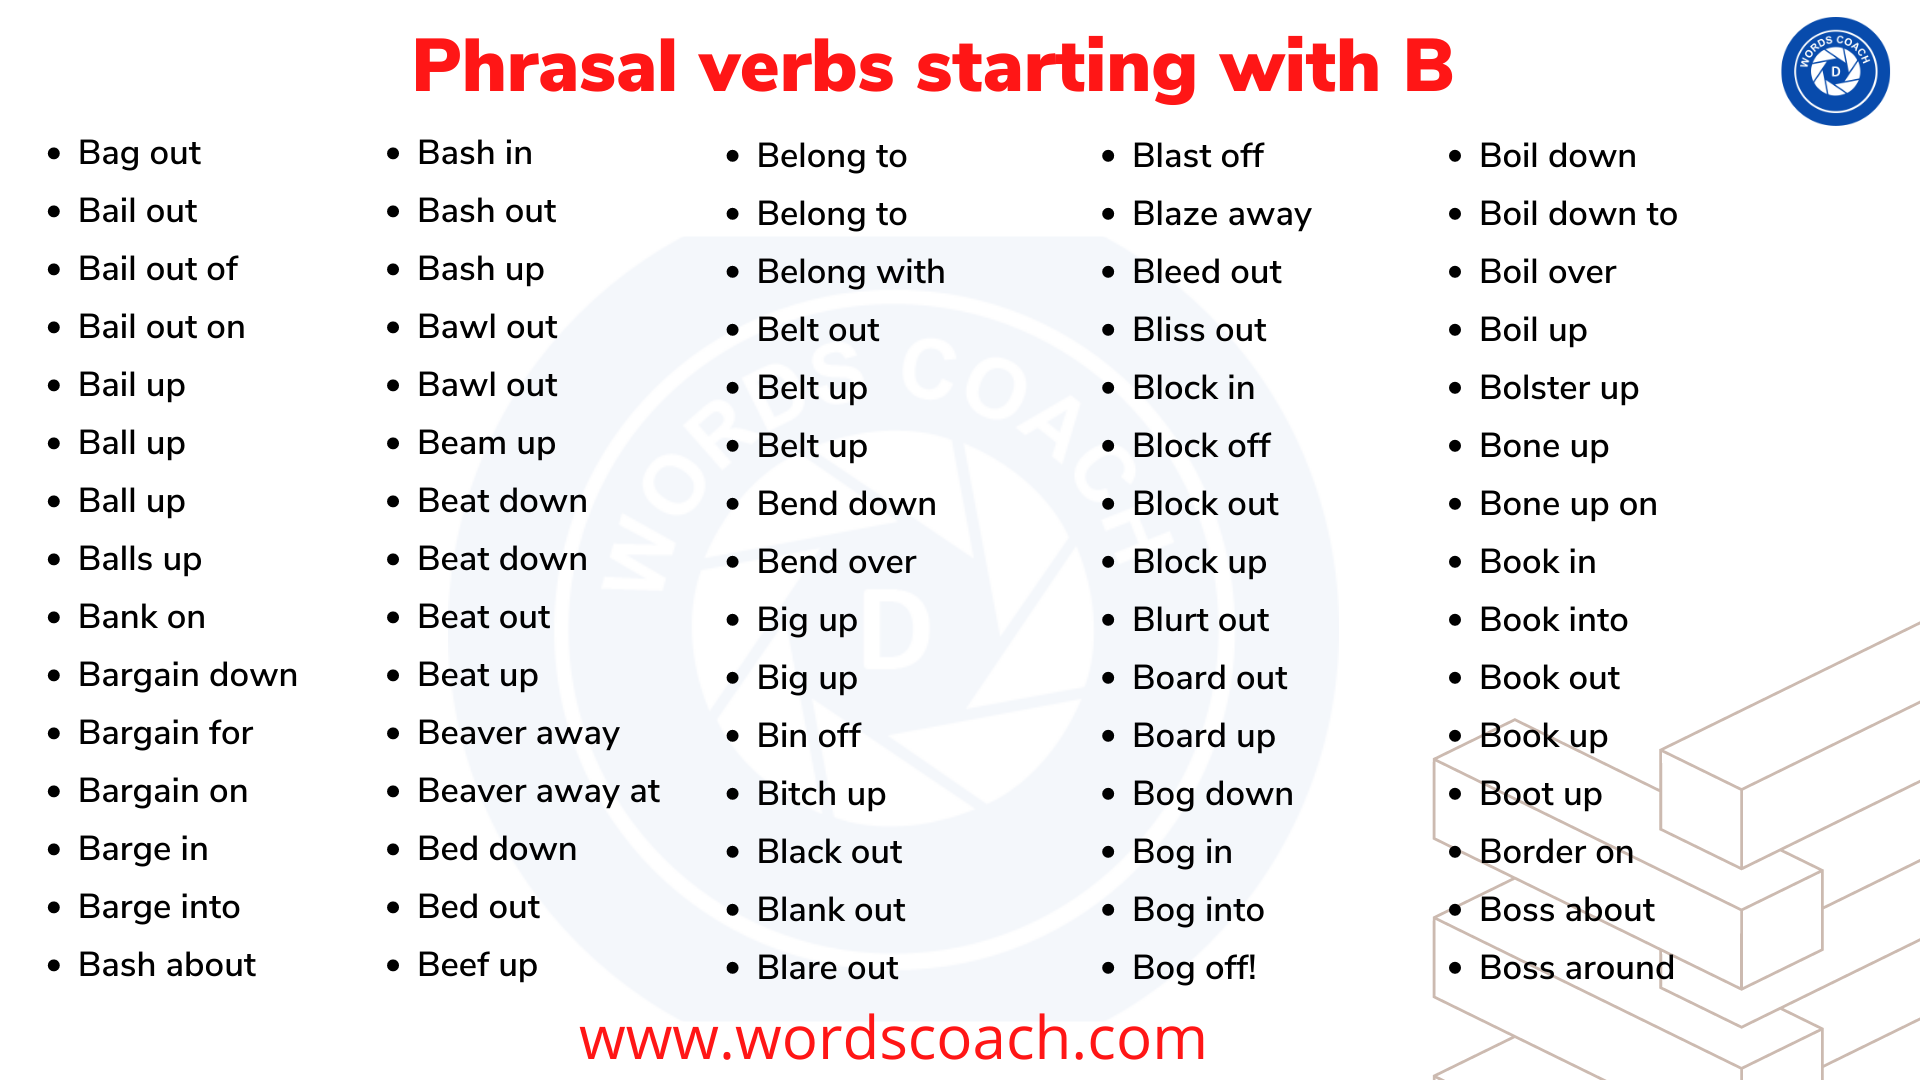 Phrasal verbs starting with B